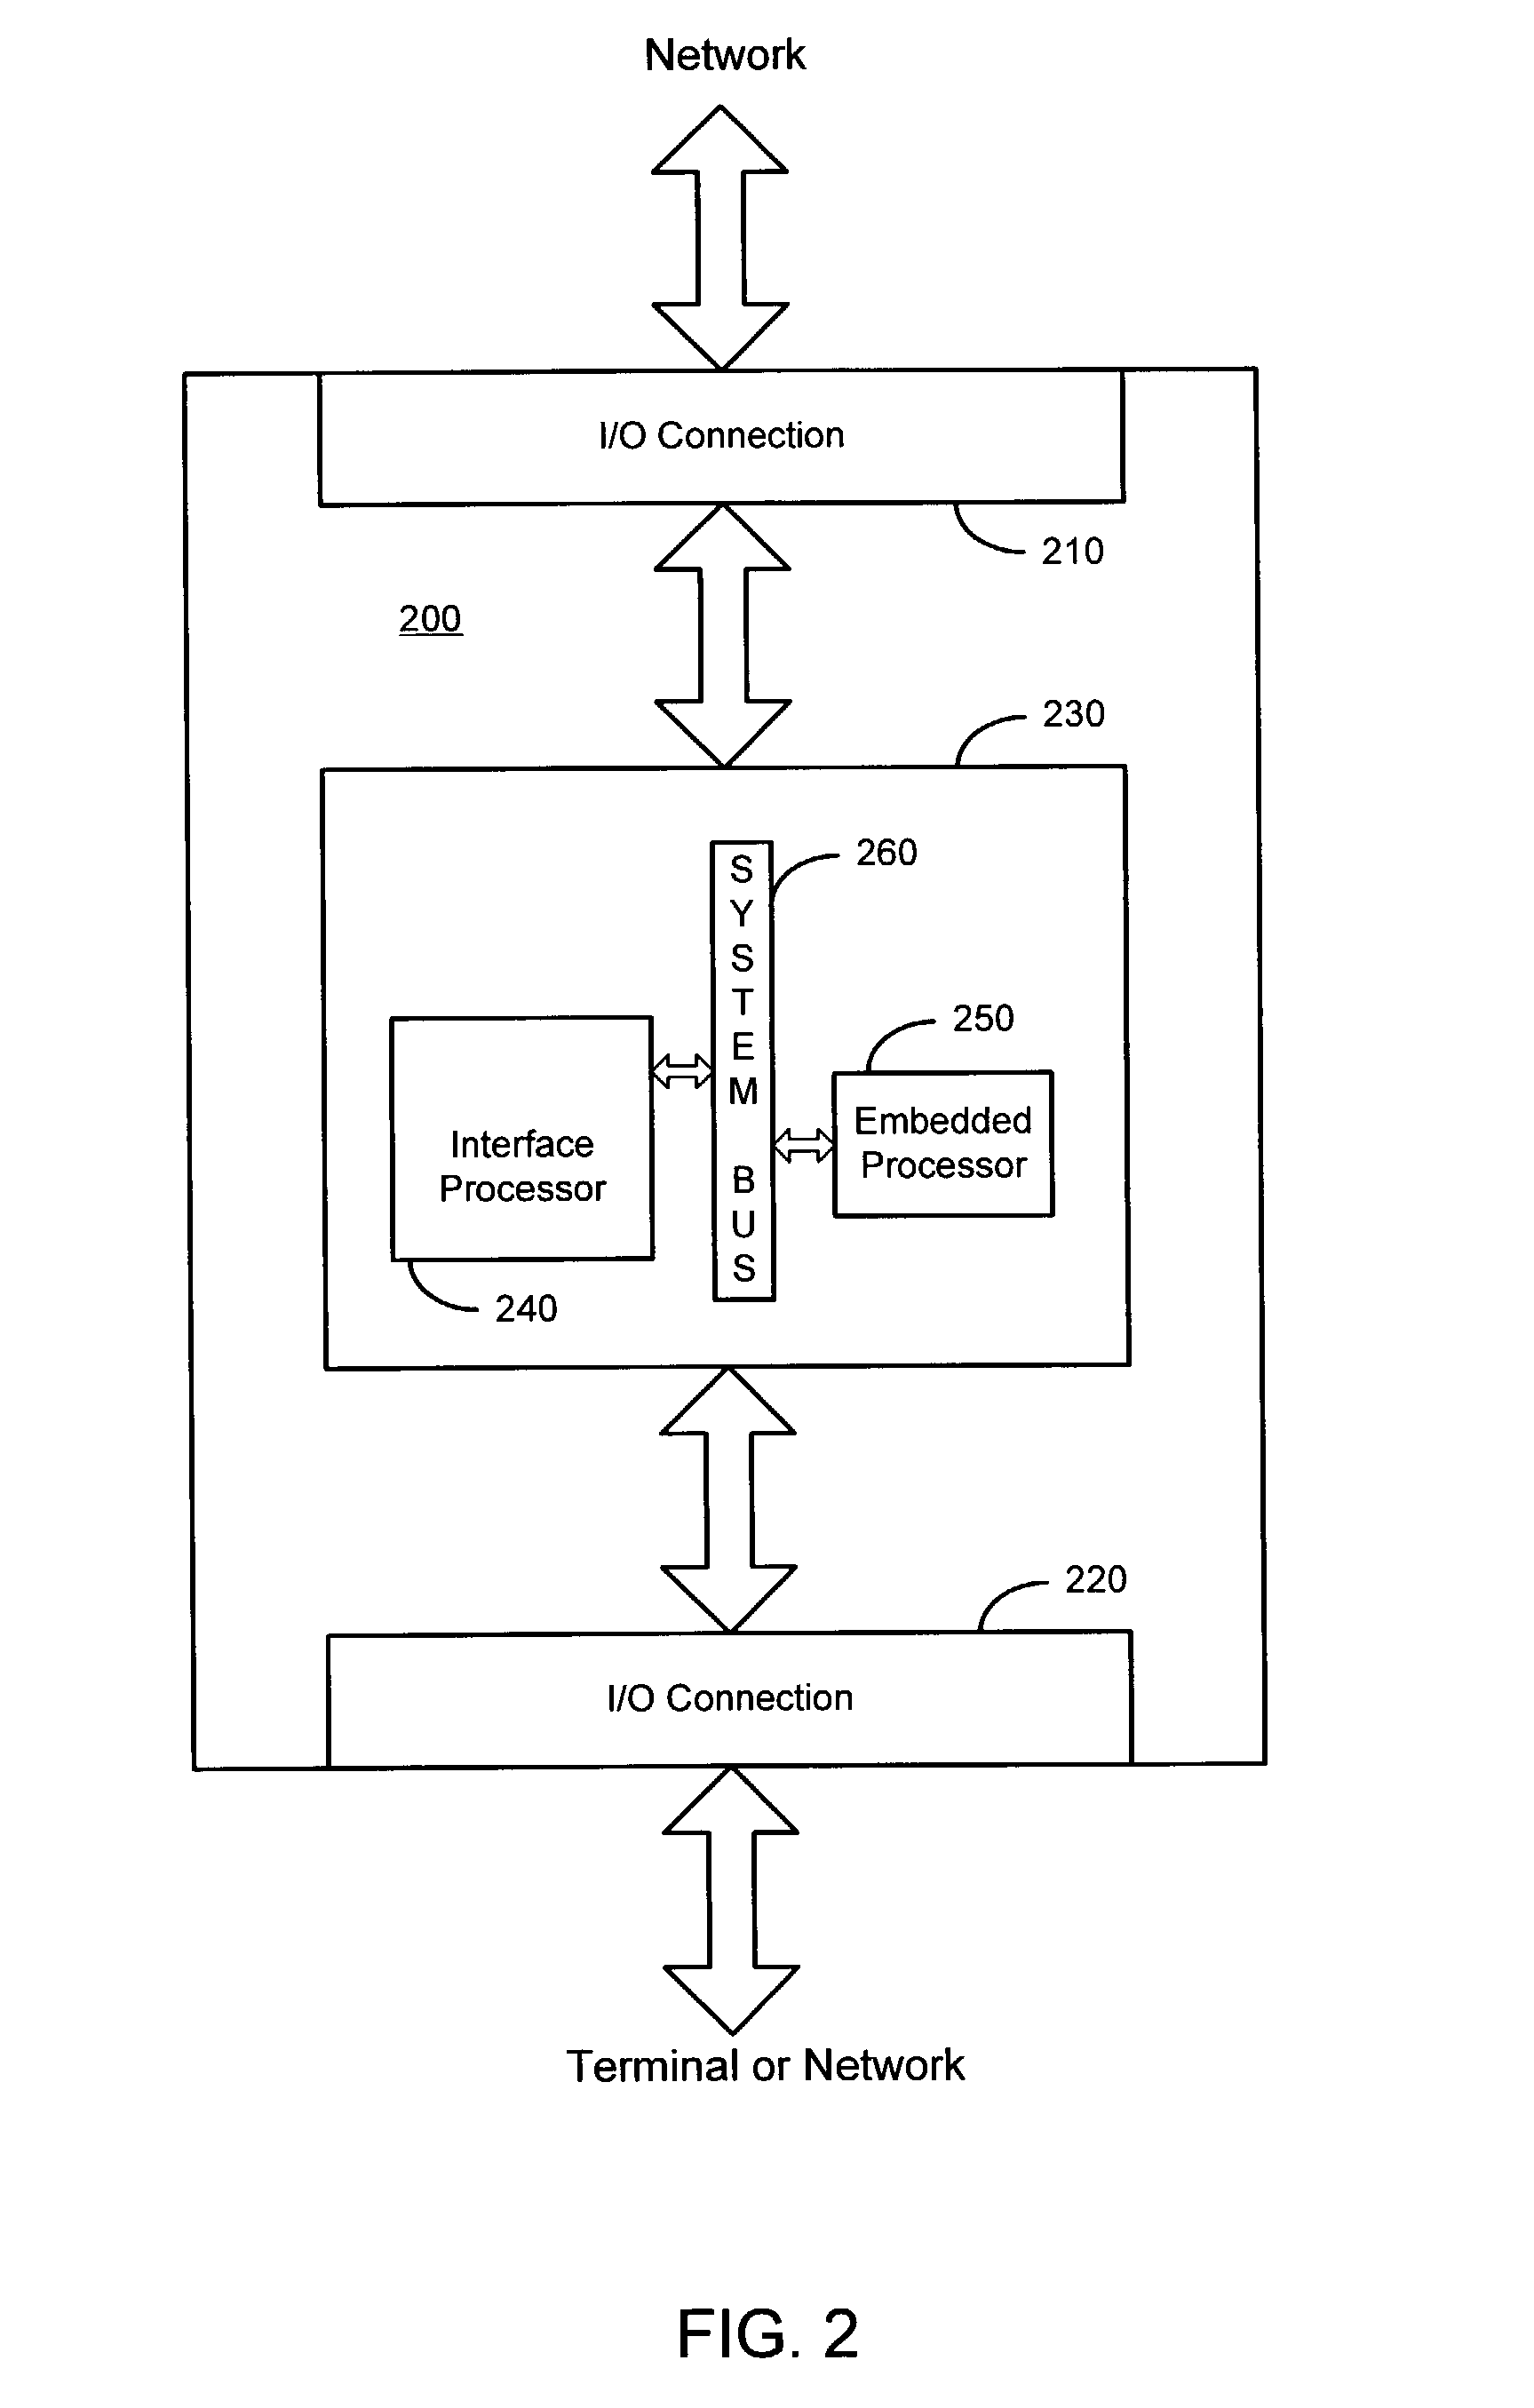 Hardware-based packet filtering accelerator